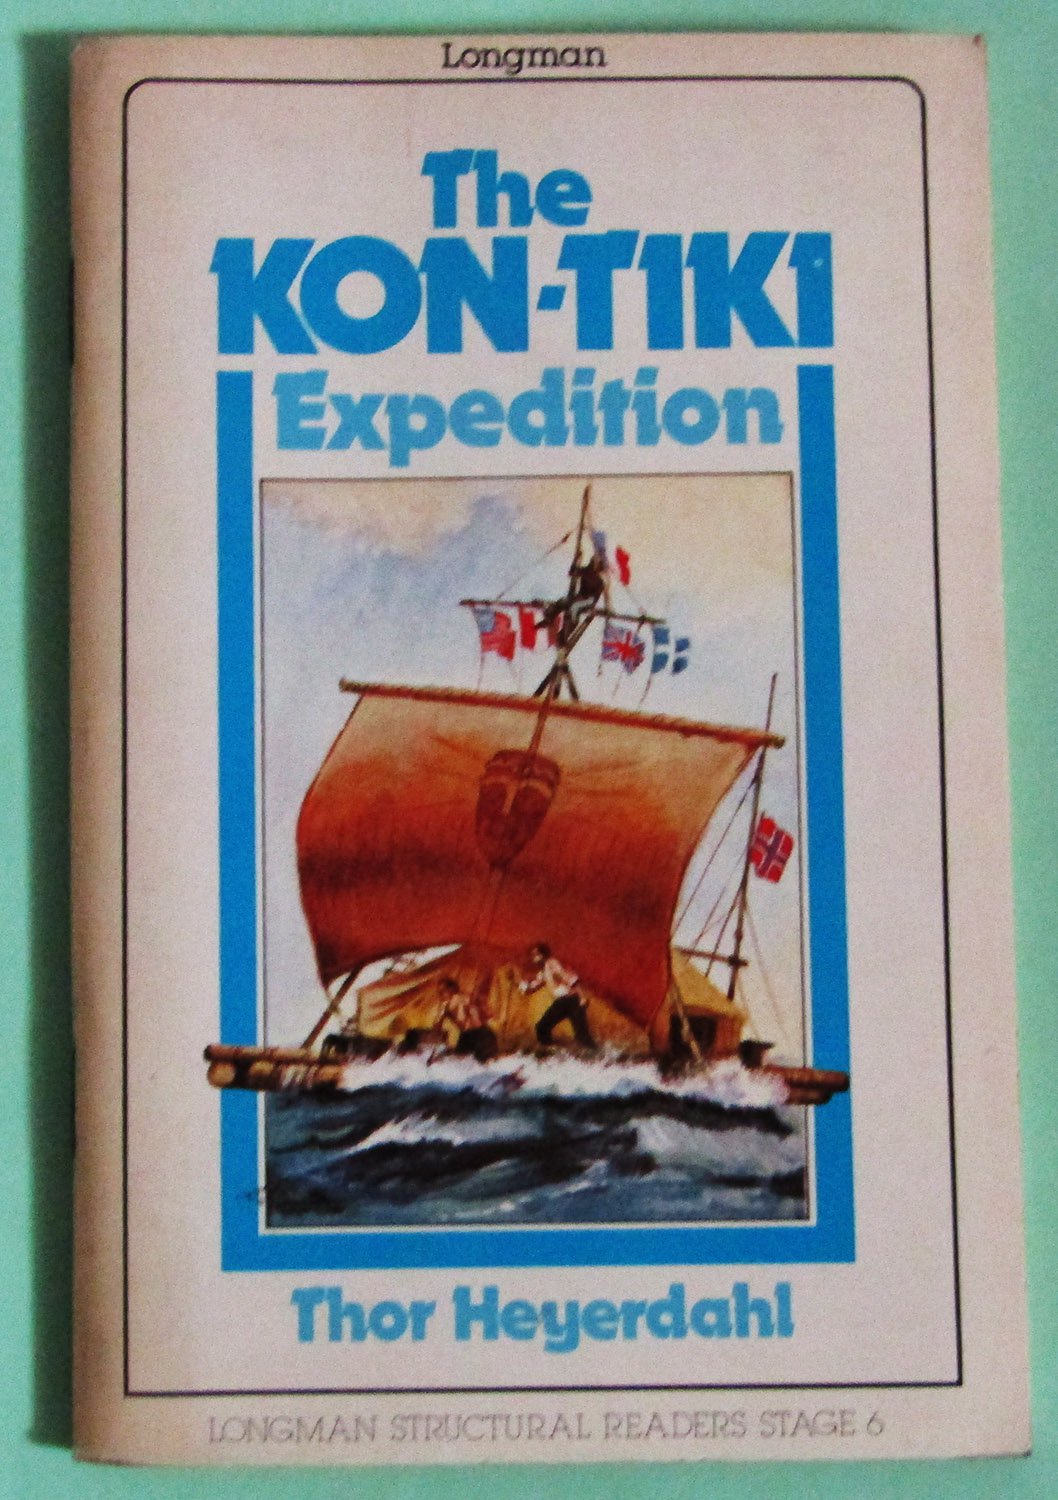 the kon tiki expedition